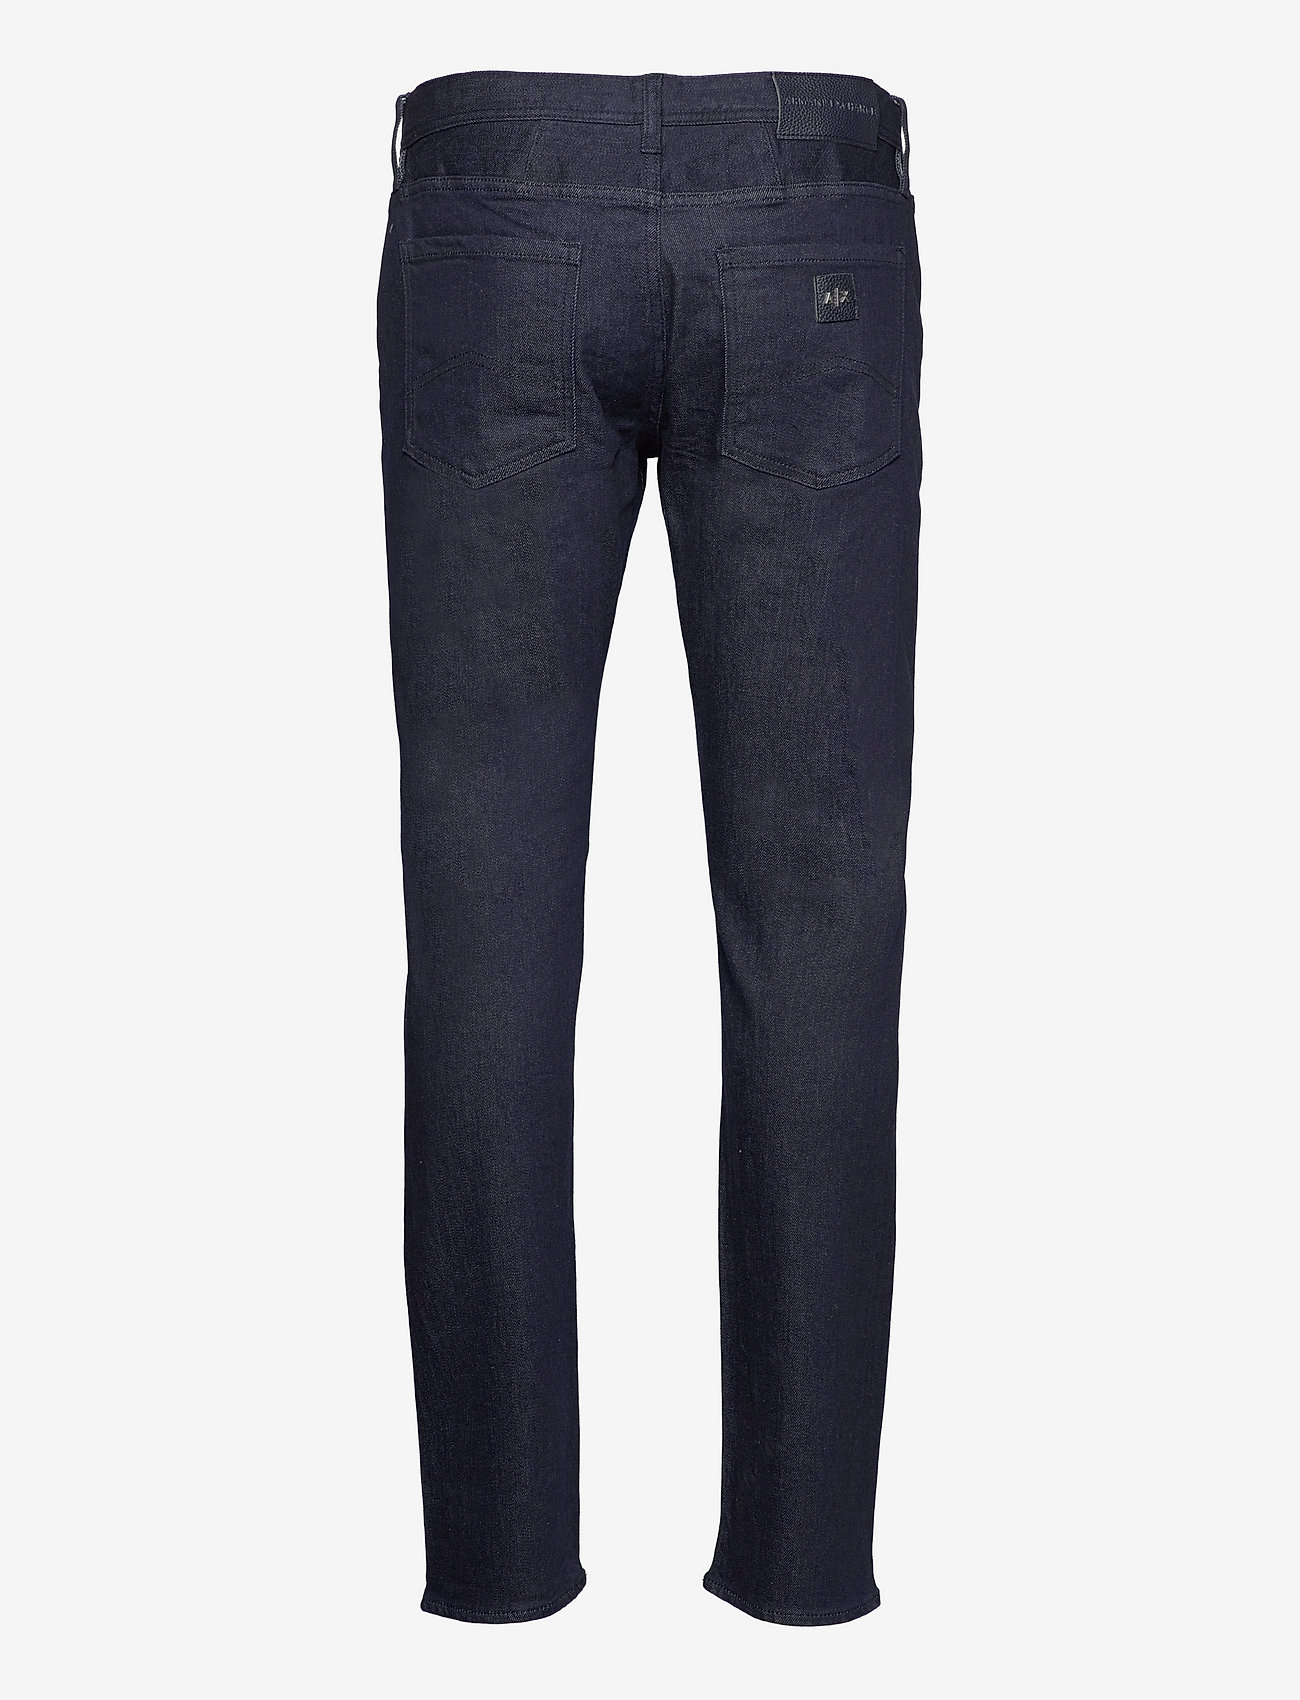 Armani Exchange - 5 POCKET JEANS - slim fit jeans - indigo denim/indigo - 1